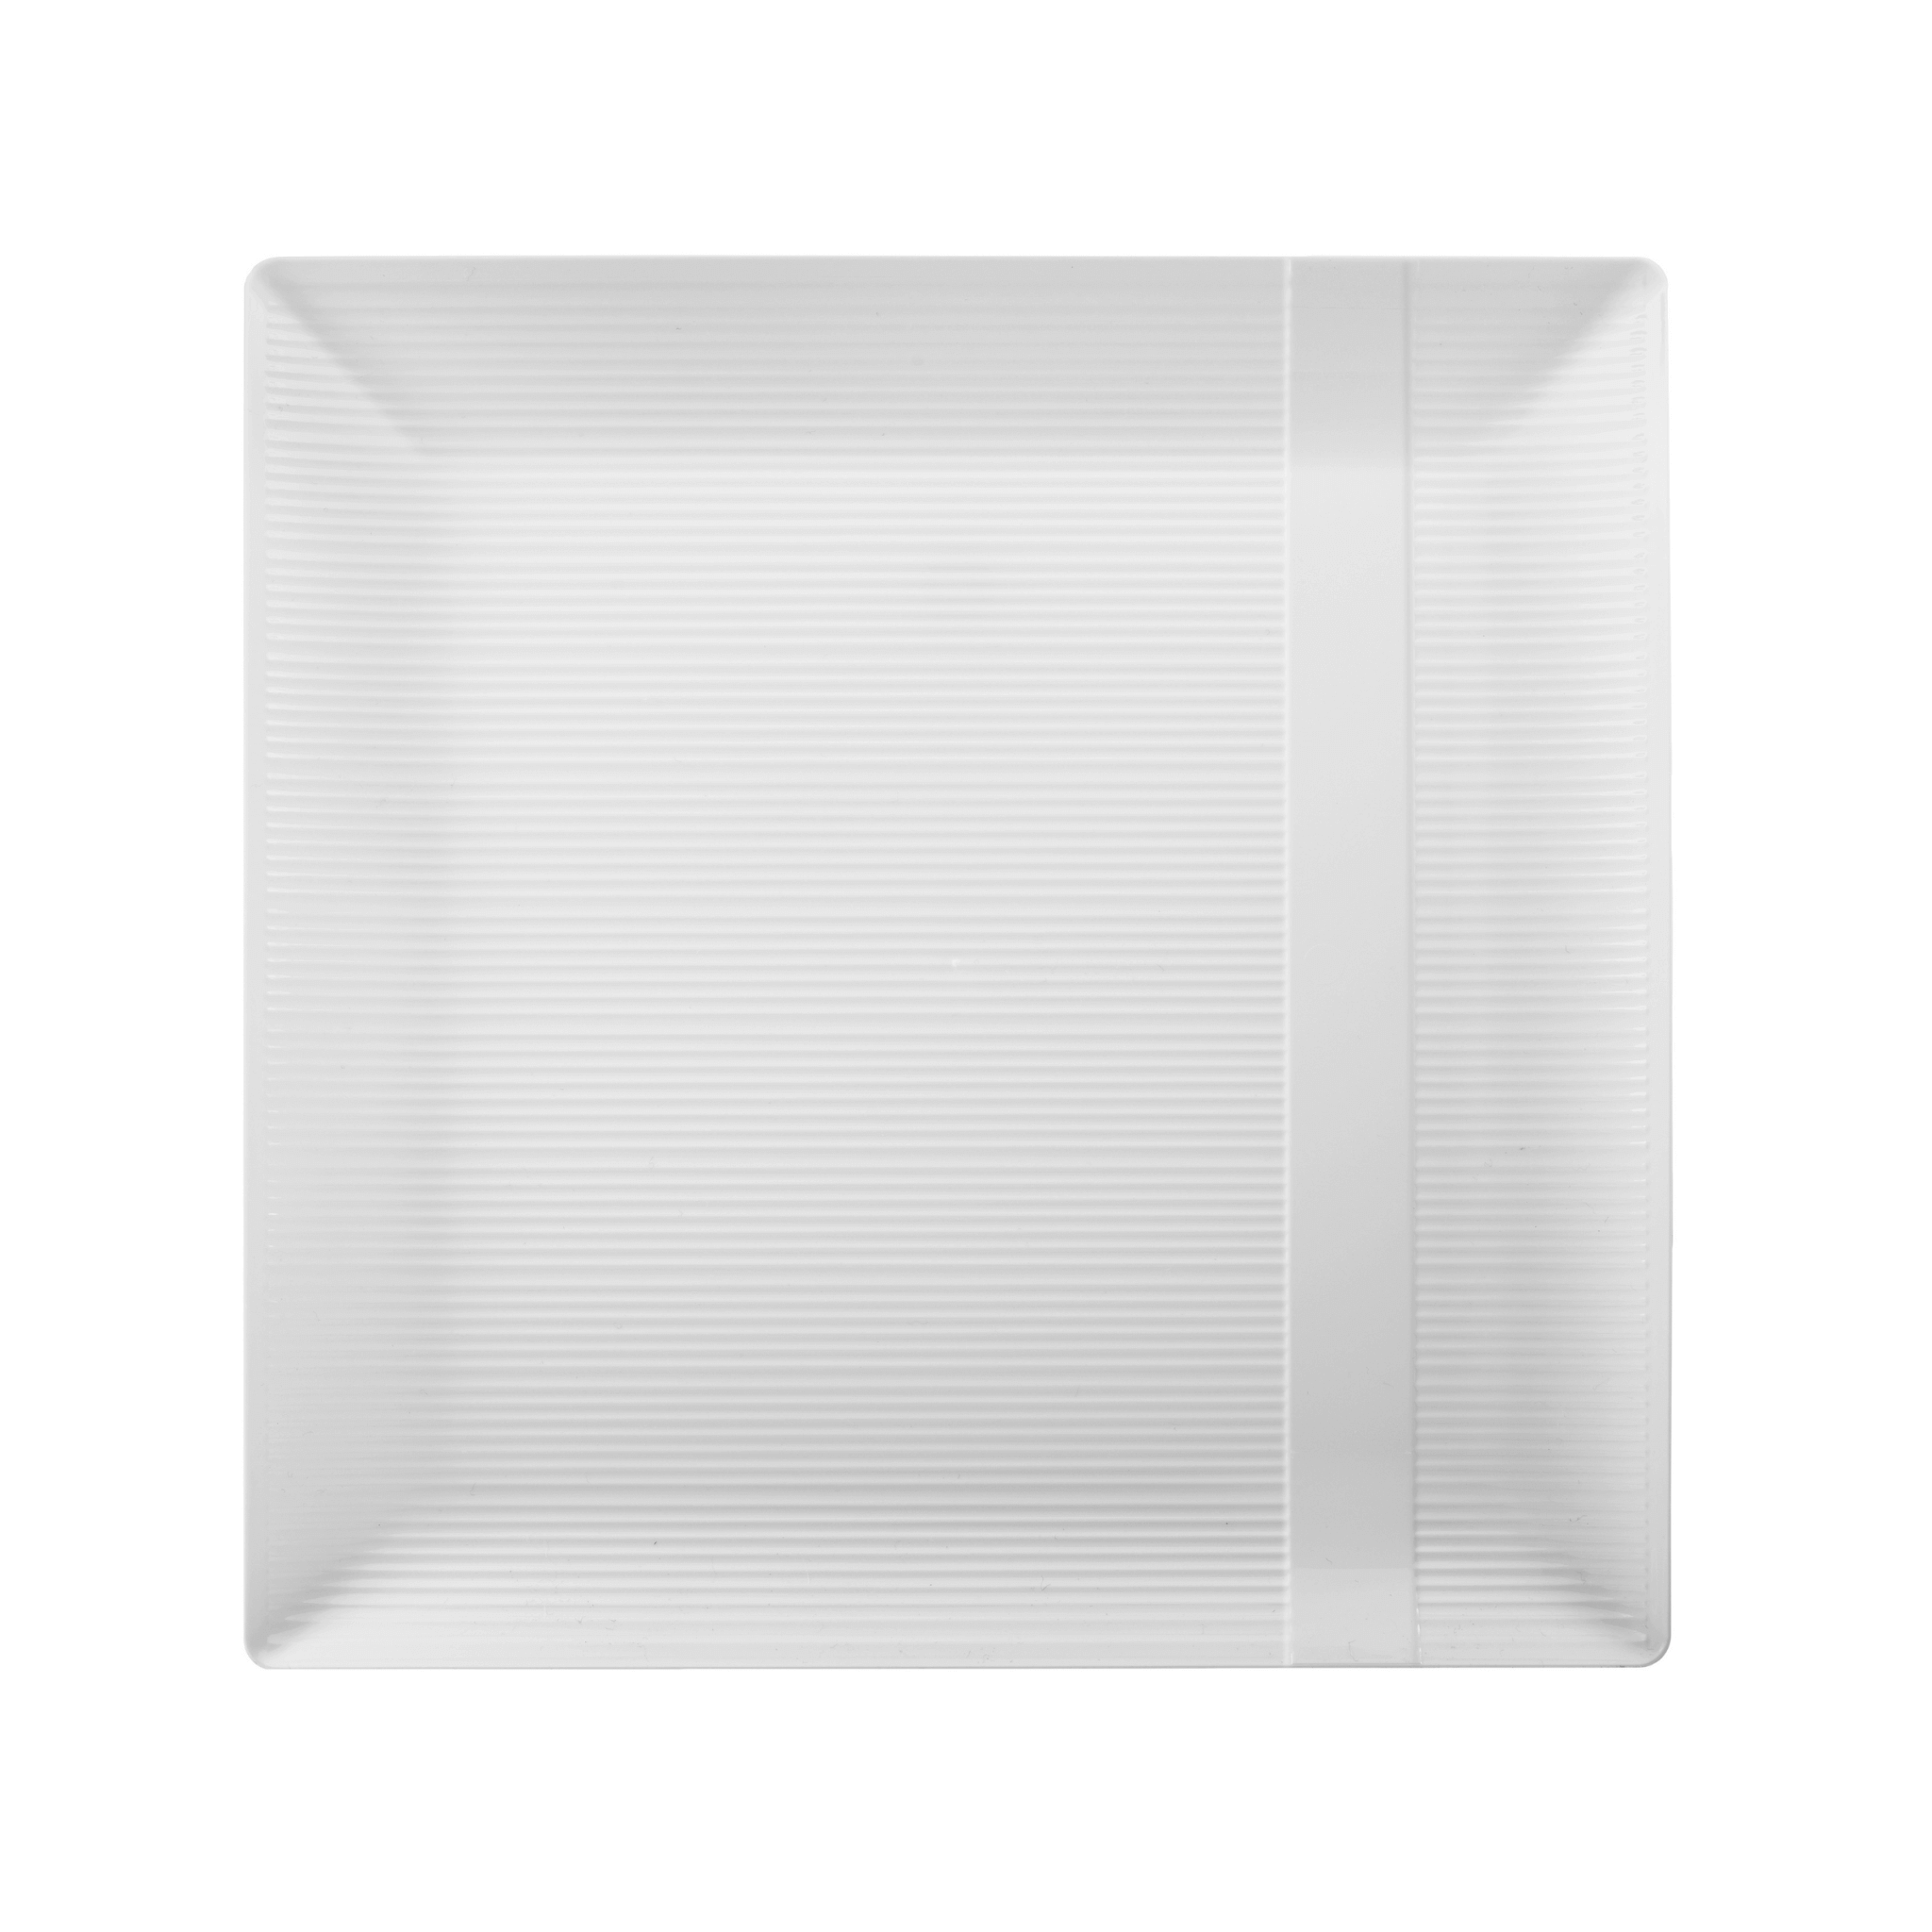 10.25" Zen Ridged White Square Plastic Plates (120 Count) - Yom Tov Settings